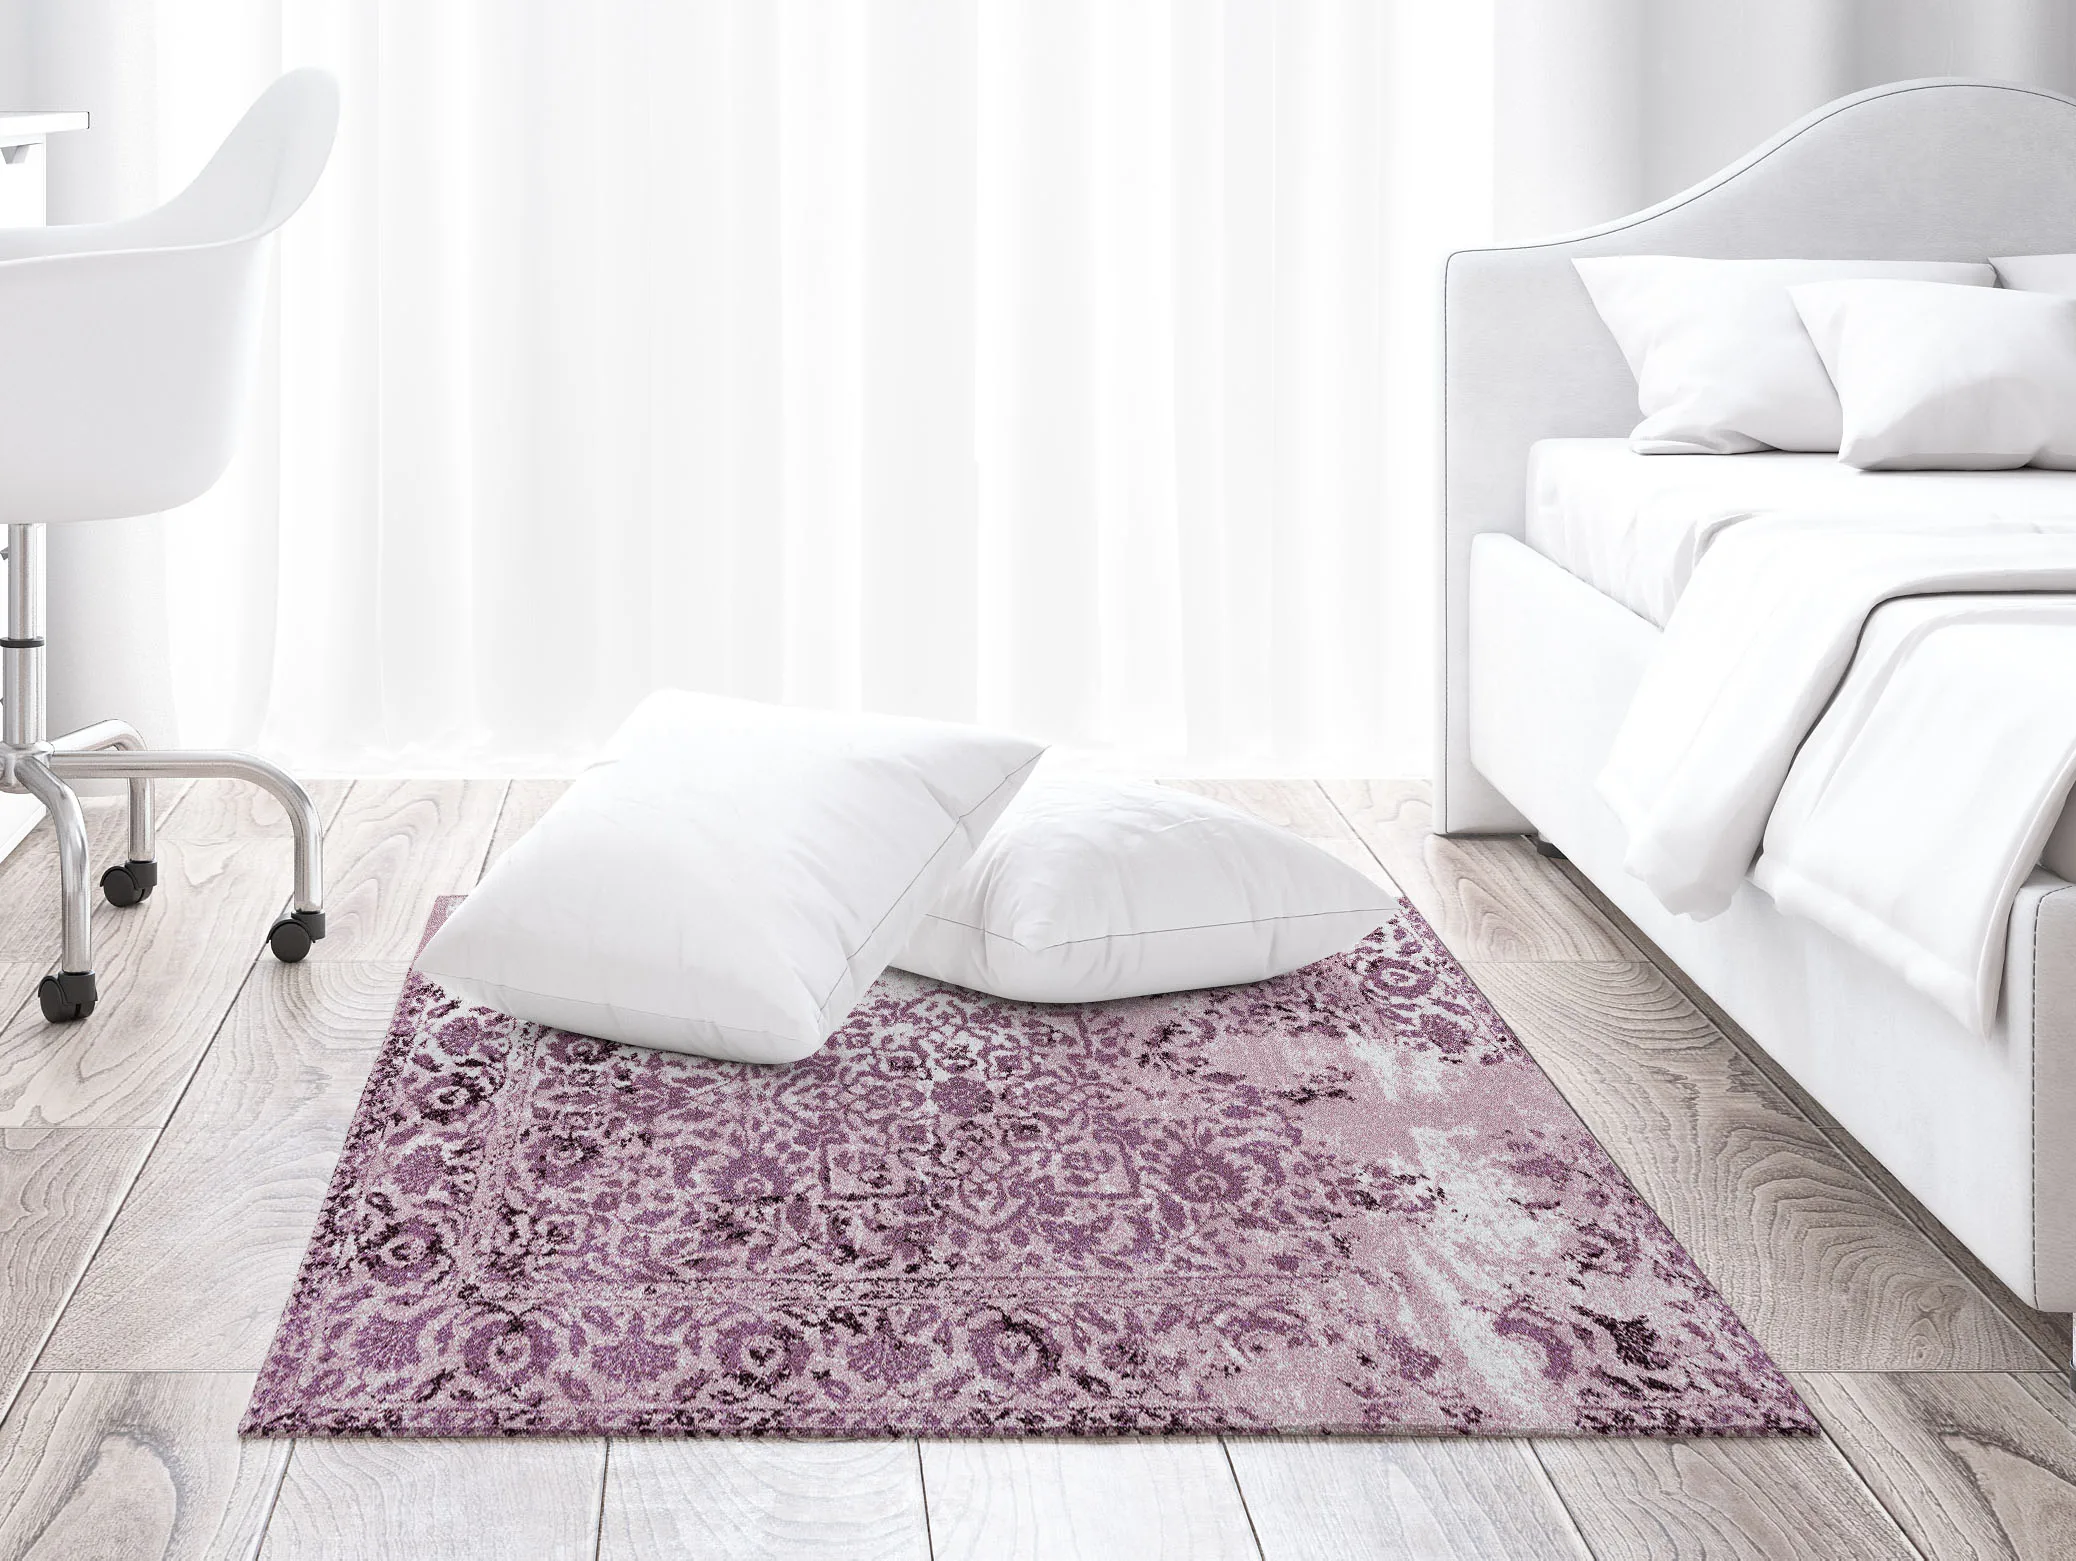 

Rose Area Rug Fashion Carpet Turkish Floor Soft Modern Decoration Non-Slip Home Decor Thick Runner Durable Kilim